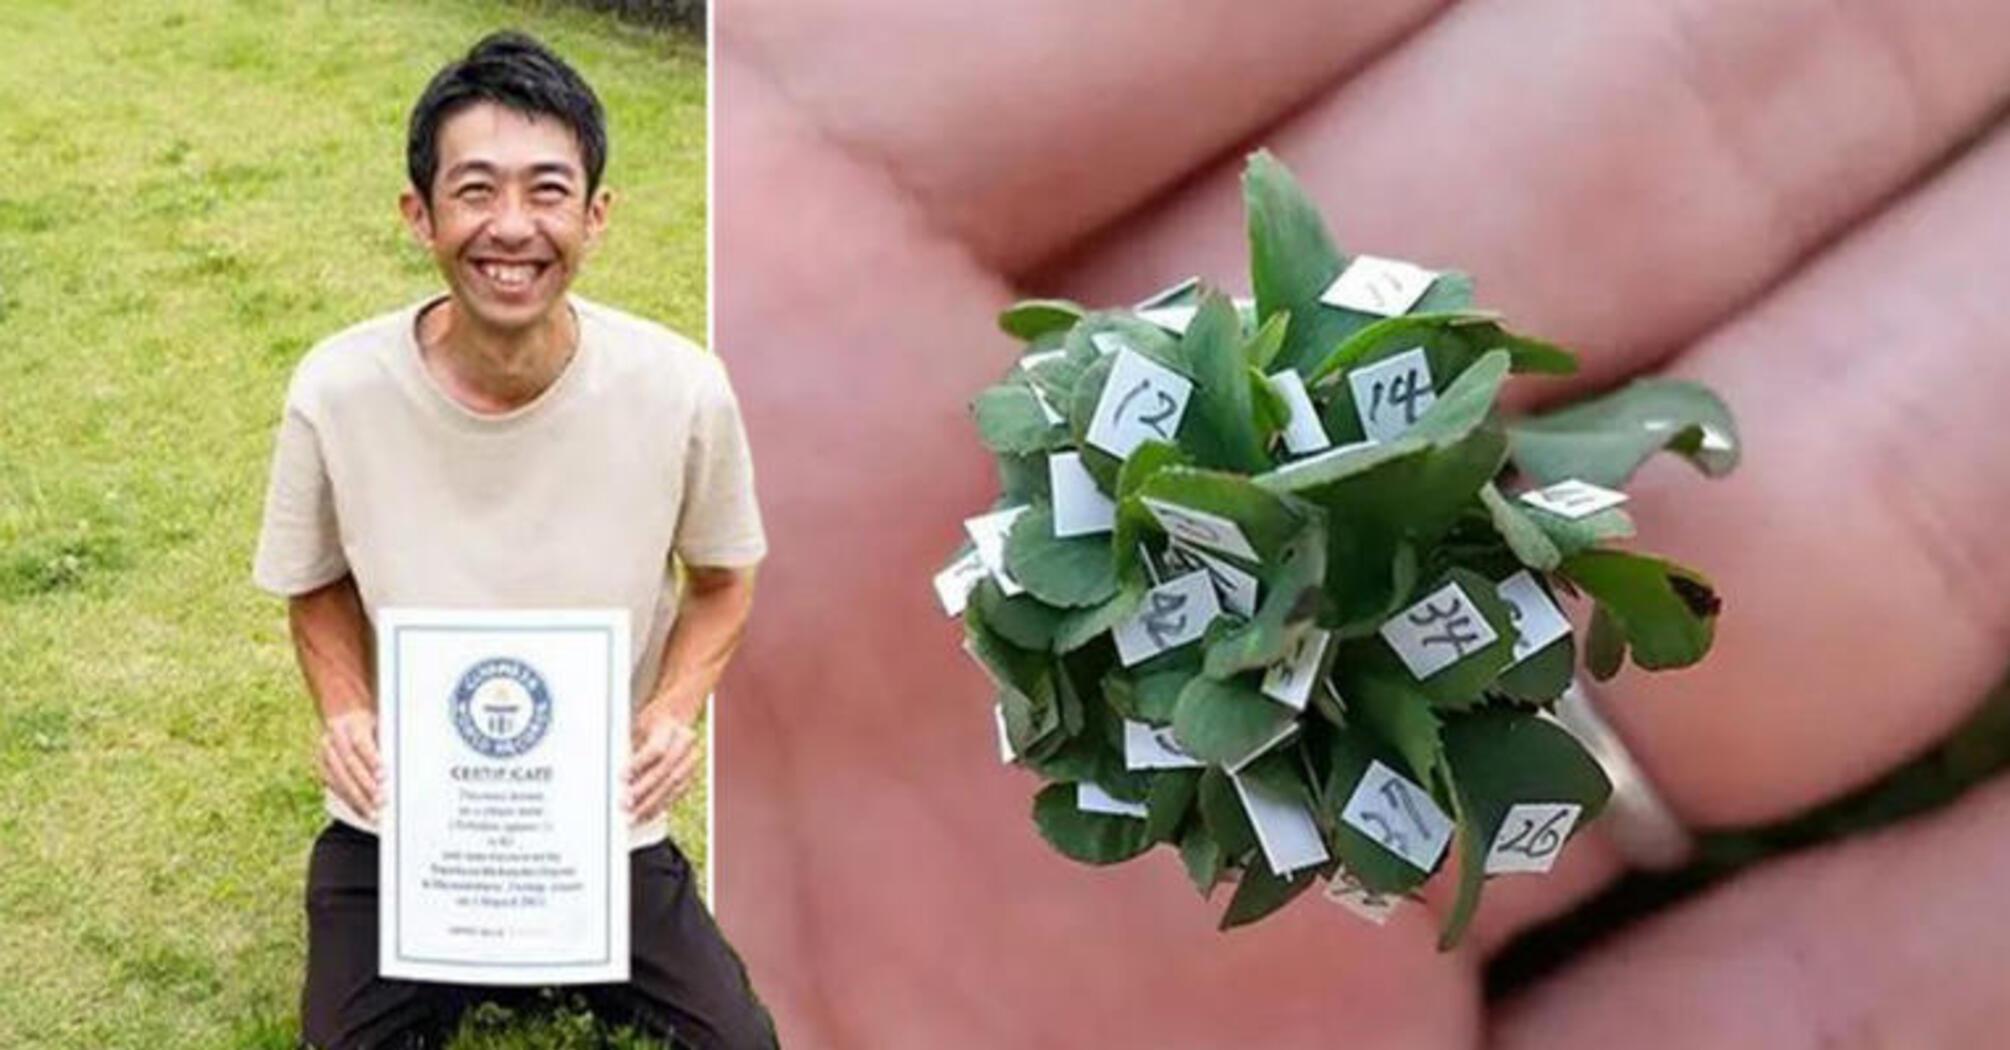 Yoshiharu Watanabe grew a clover with 63 individual leaves